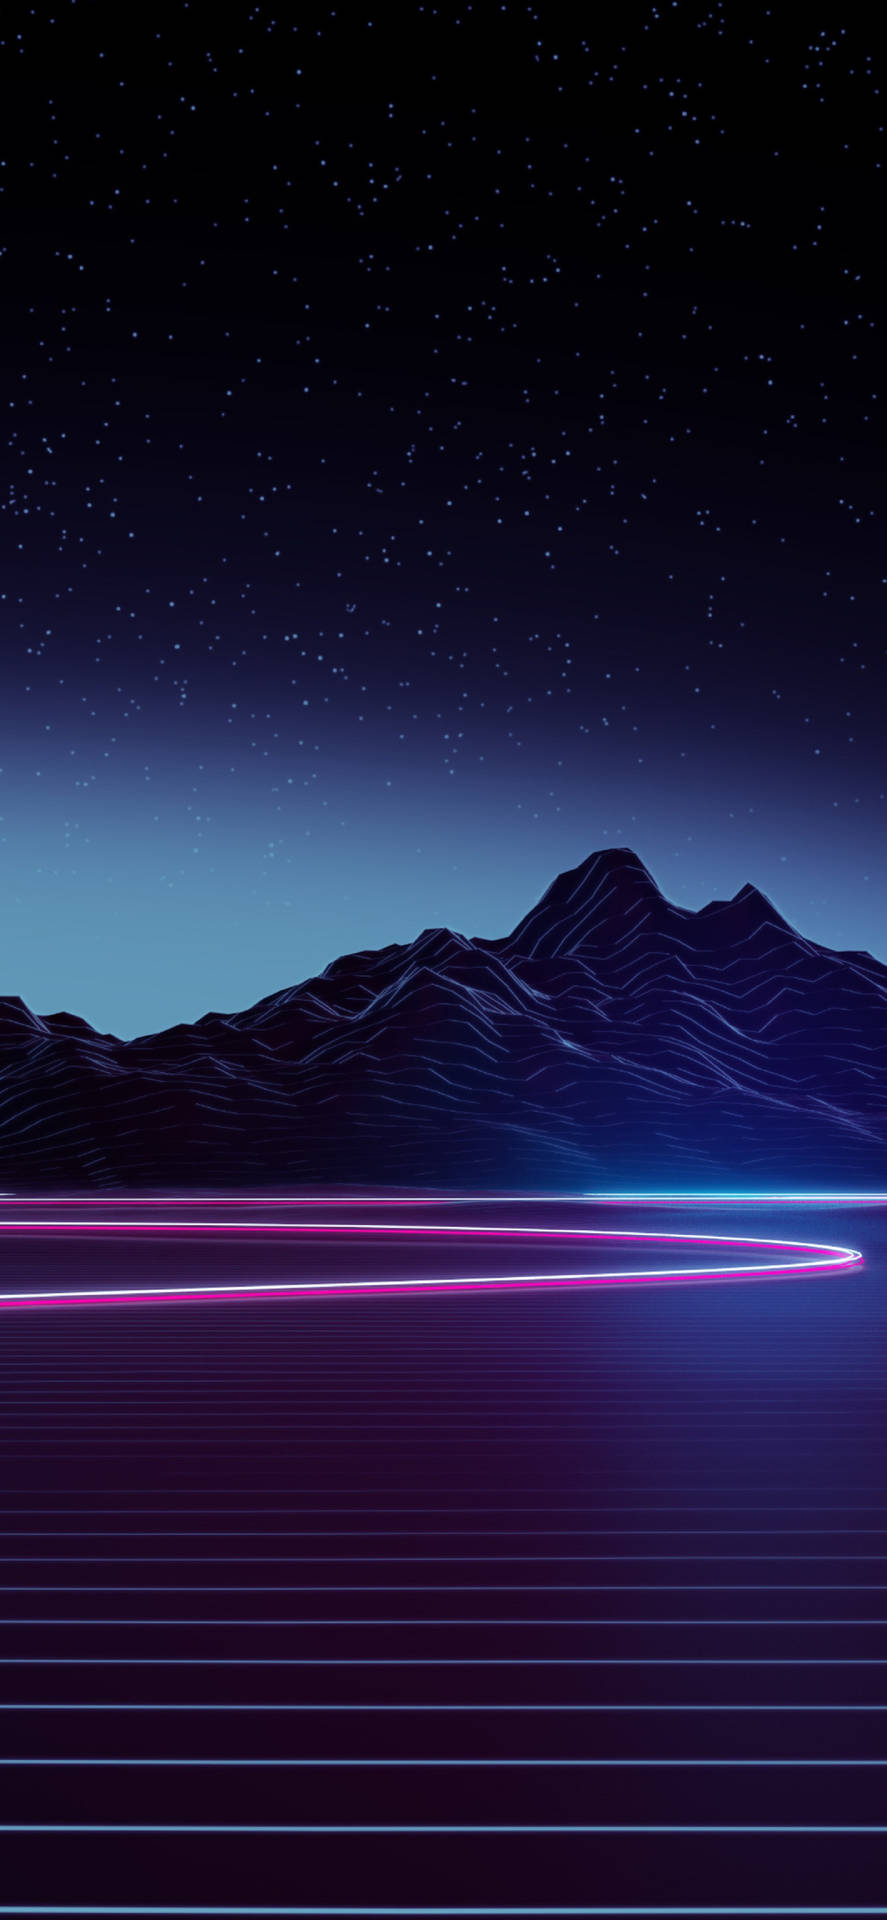 4k Neon Iphone Mountain Highway Background